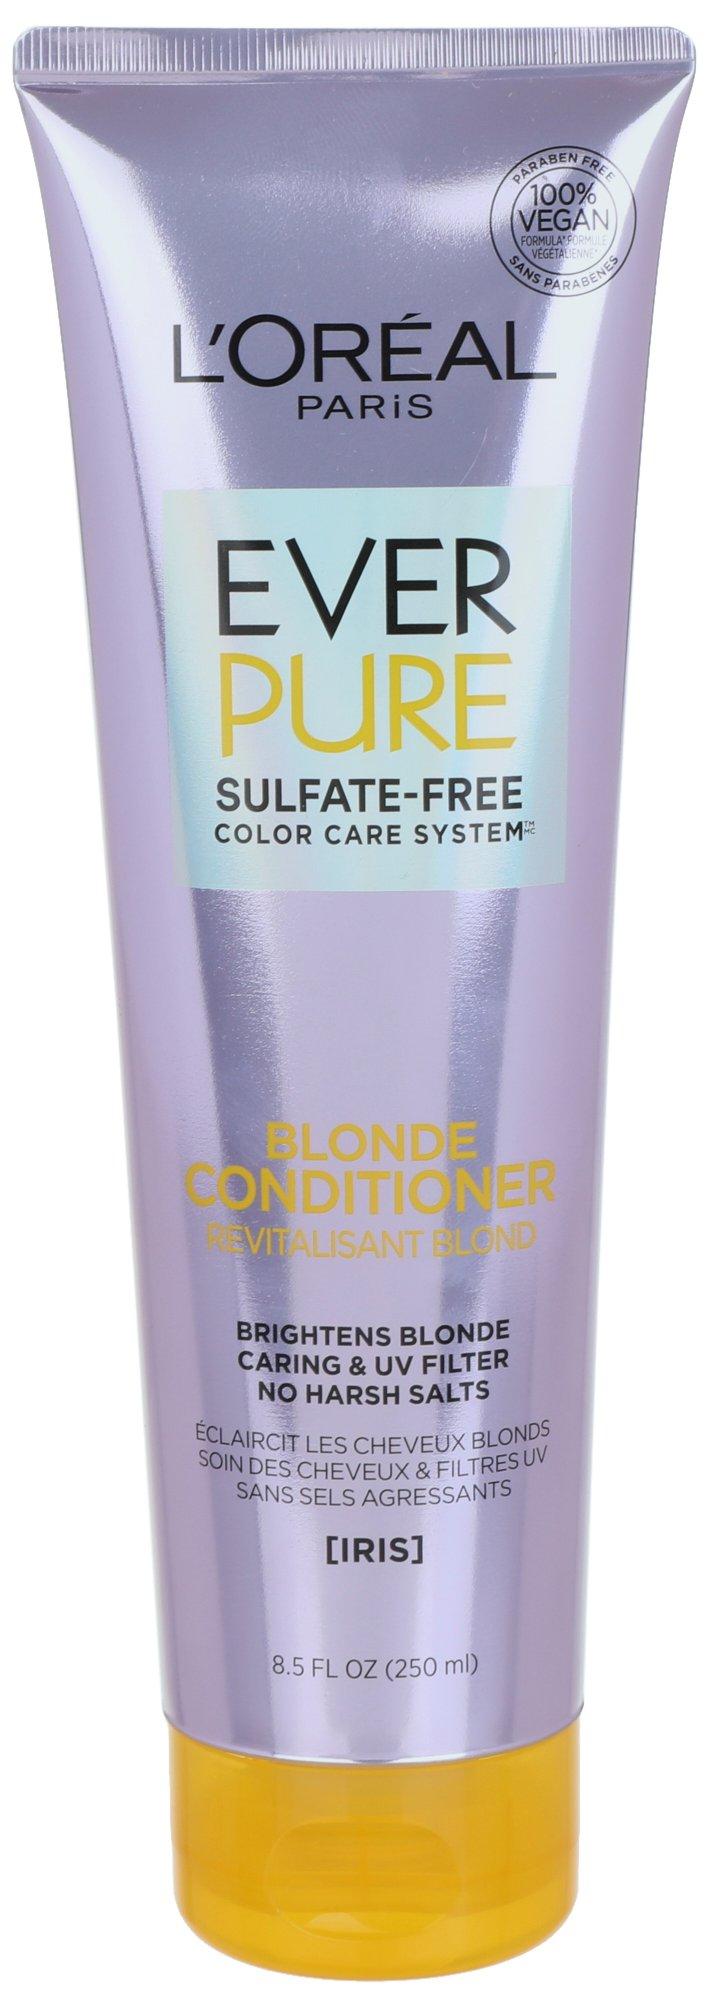 Ever Pure Blonde Conditioner 8.5 Fl. Oz.